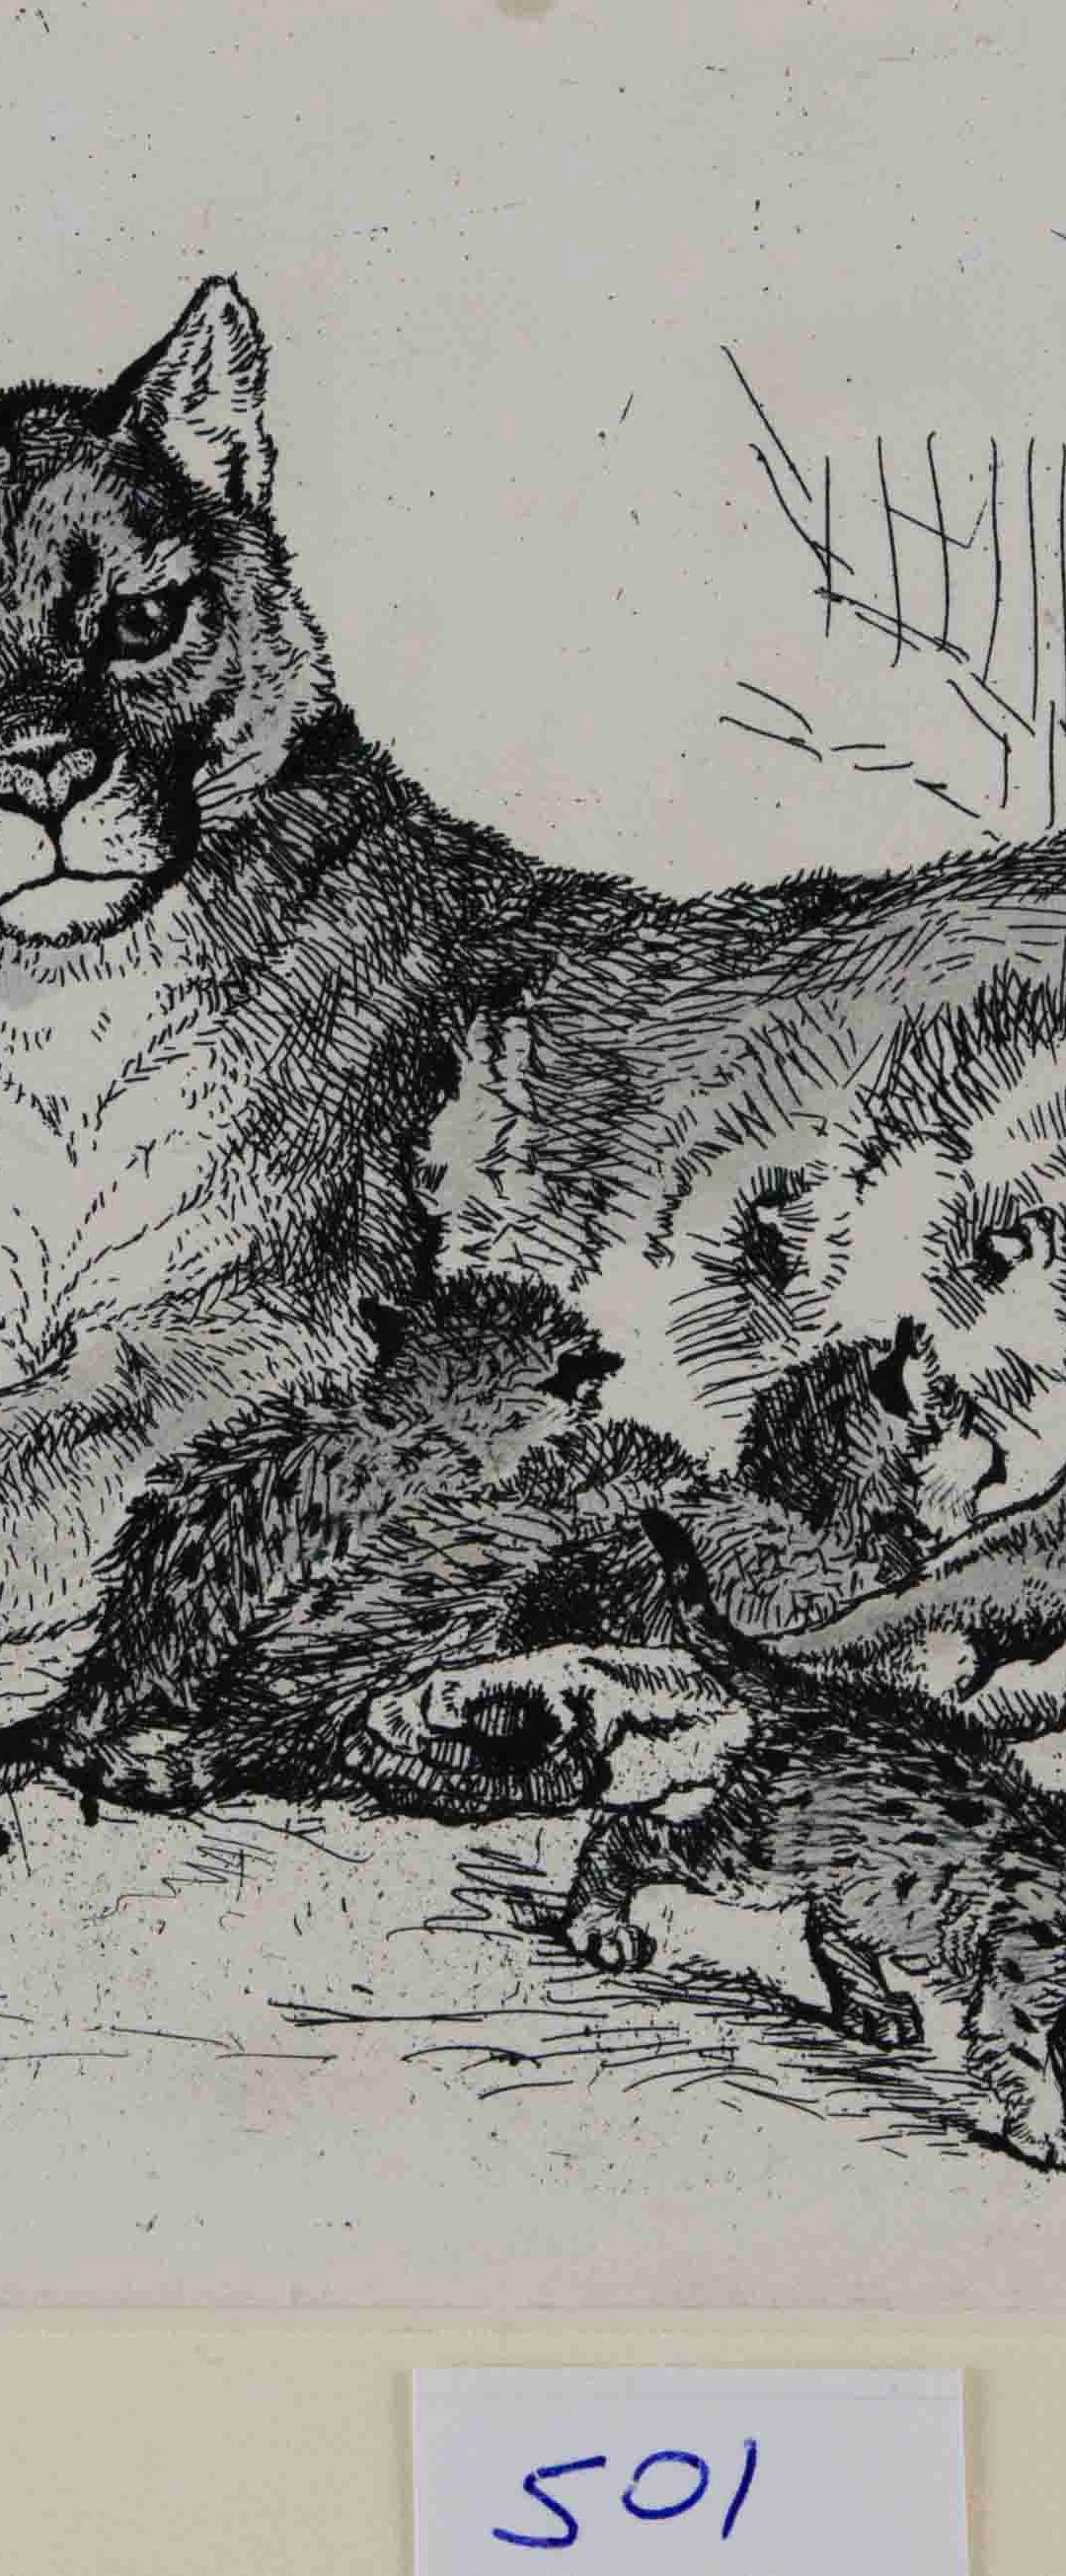 Mountain Lion or Cougar as seen by Seton